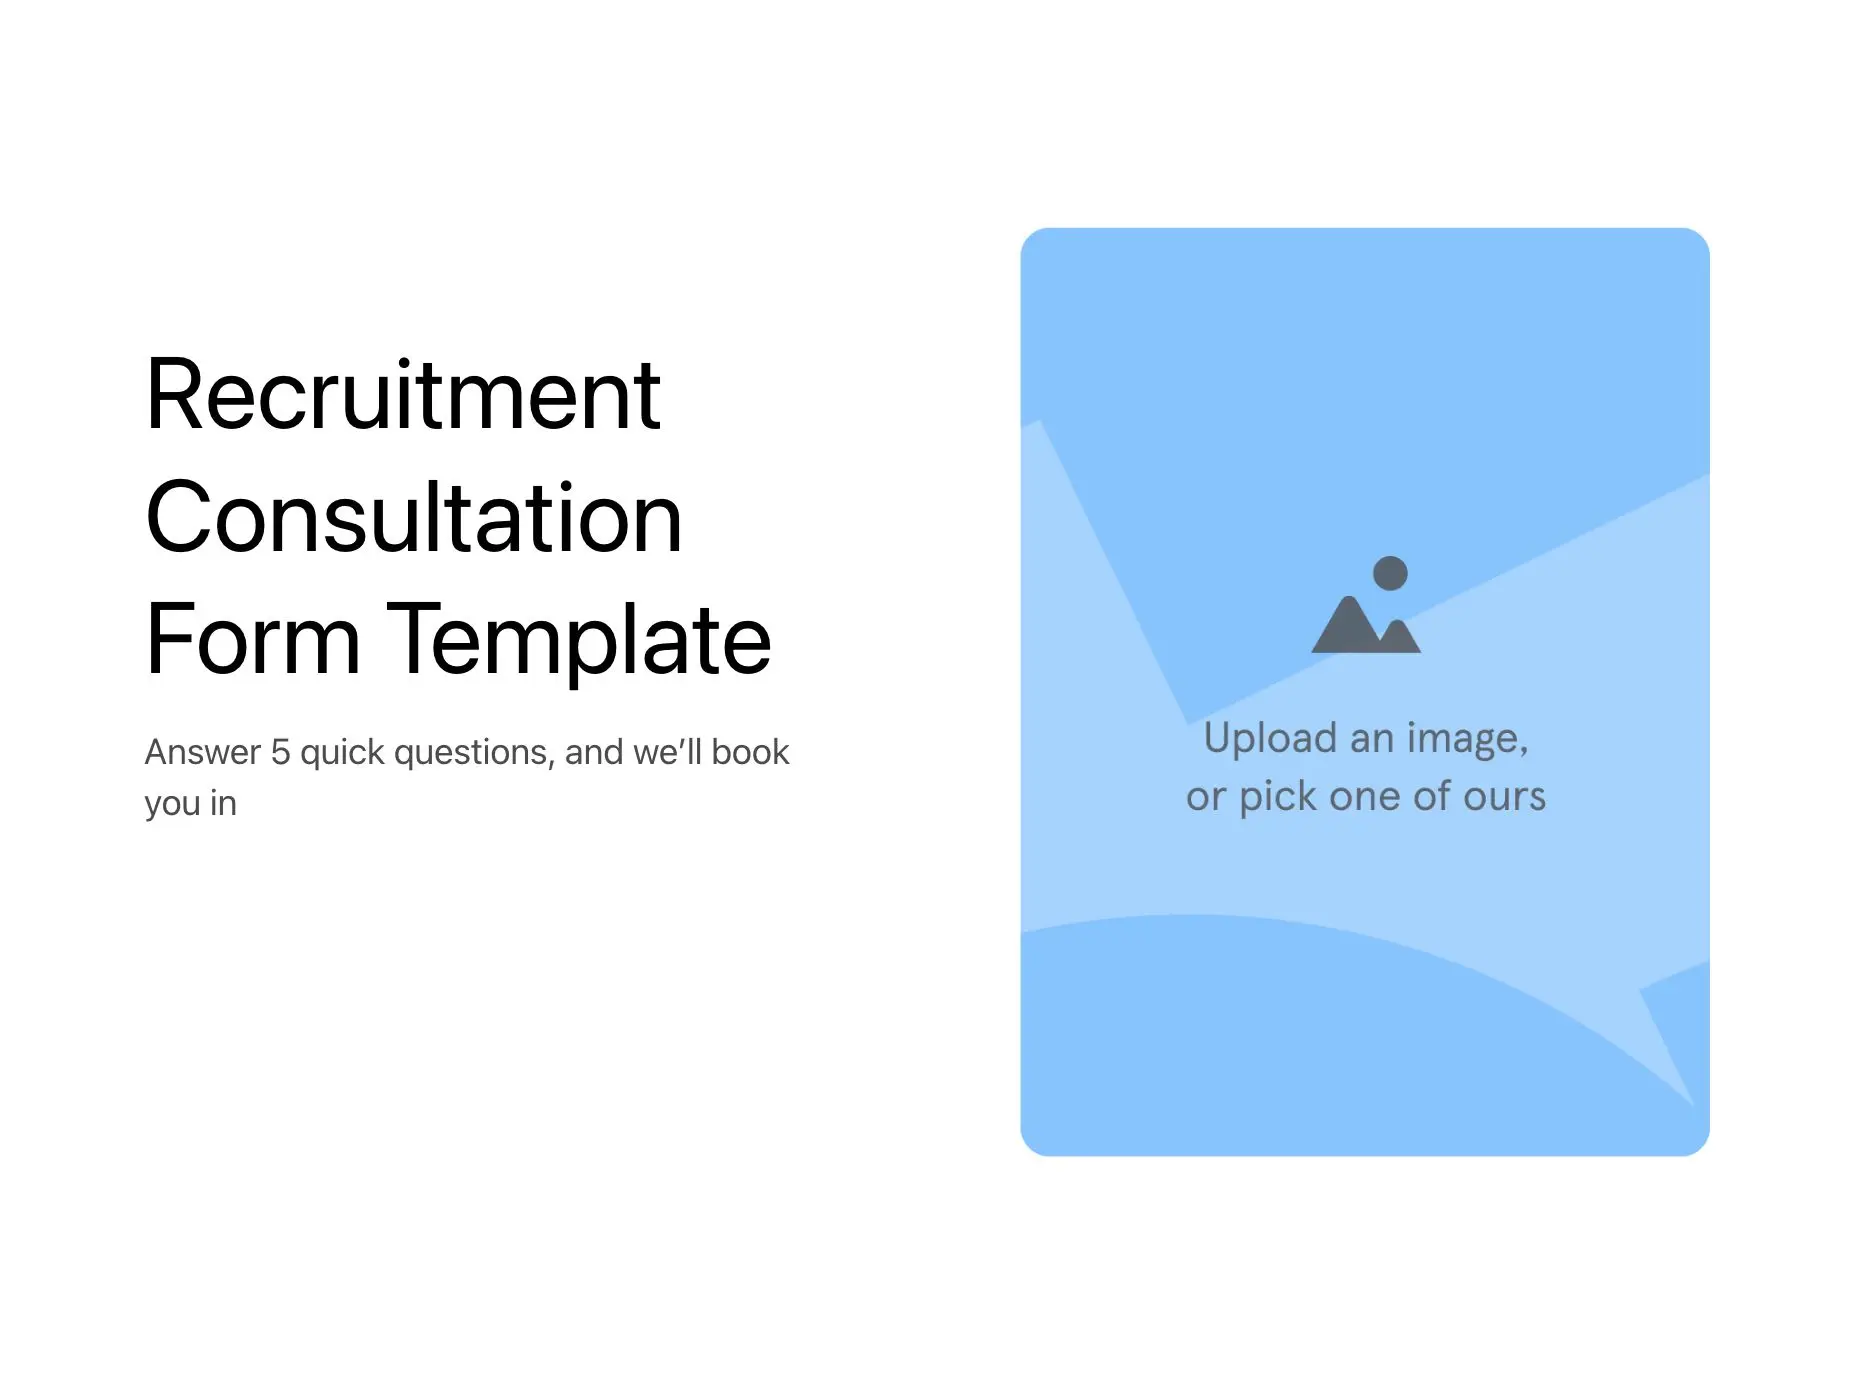 Recruitment Consultation Form Template Hero